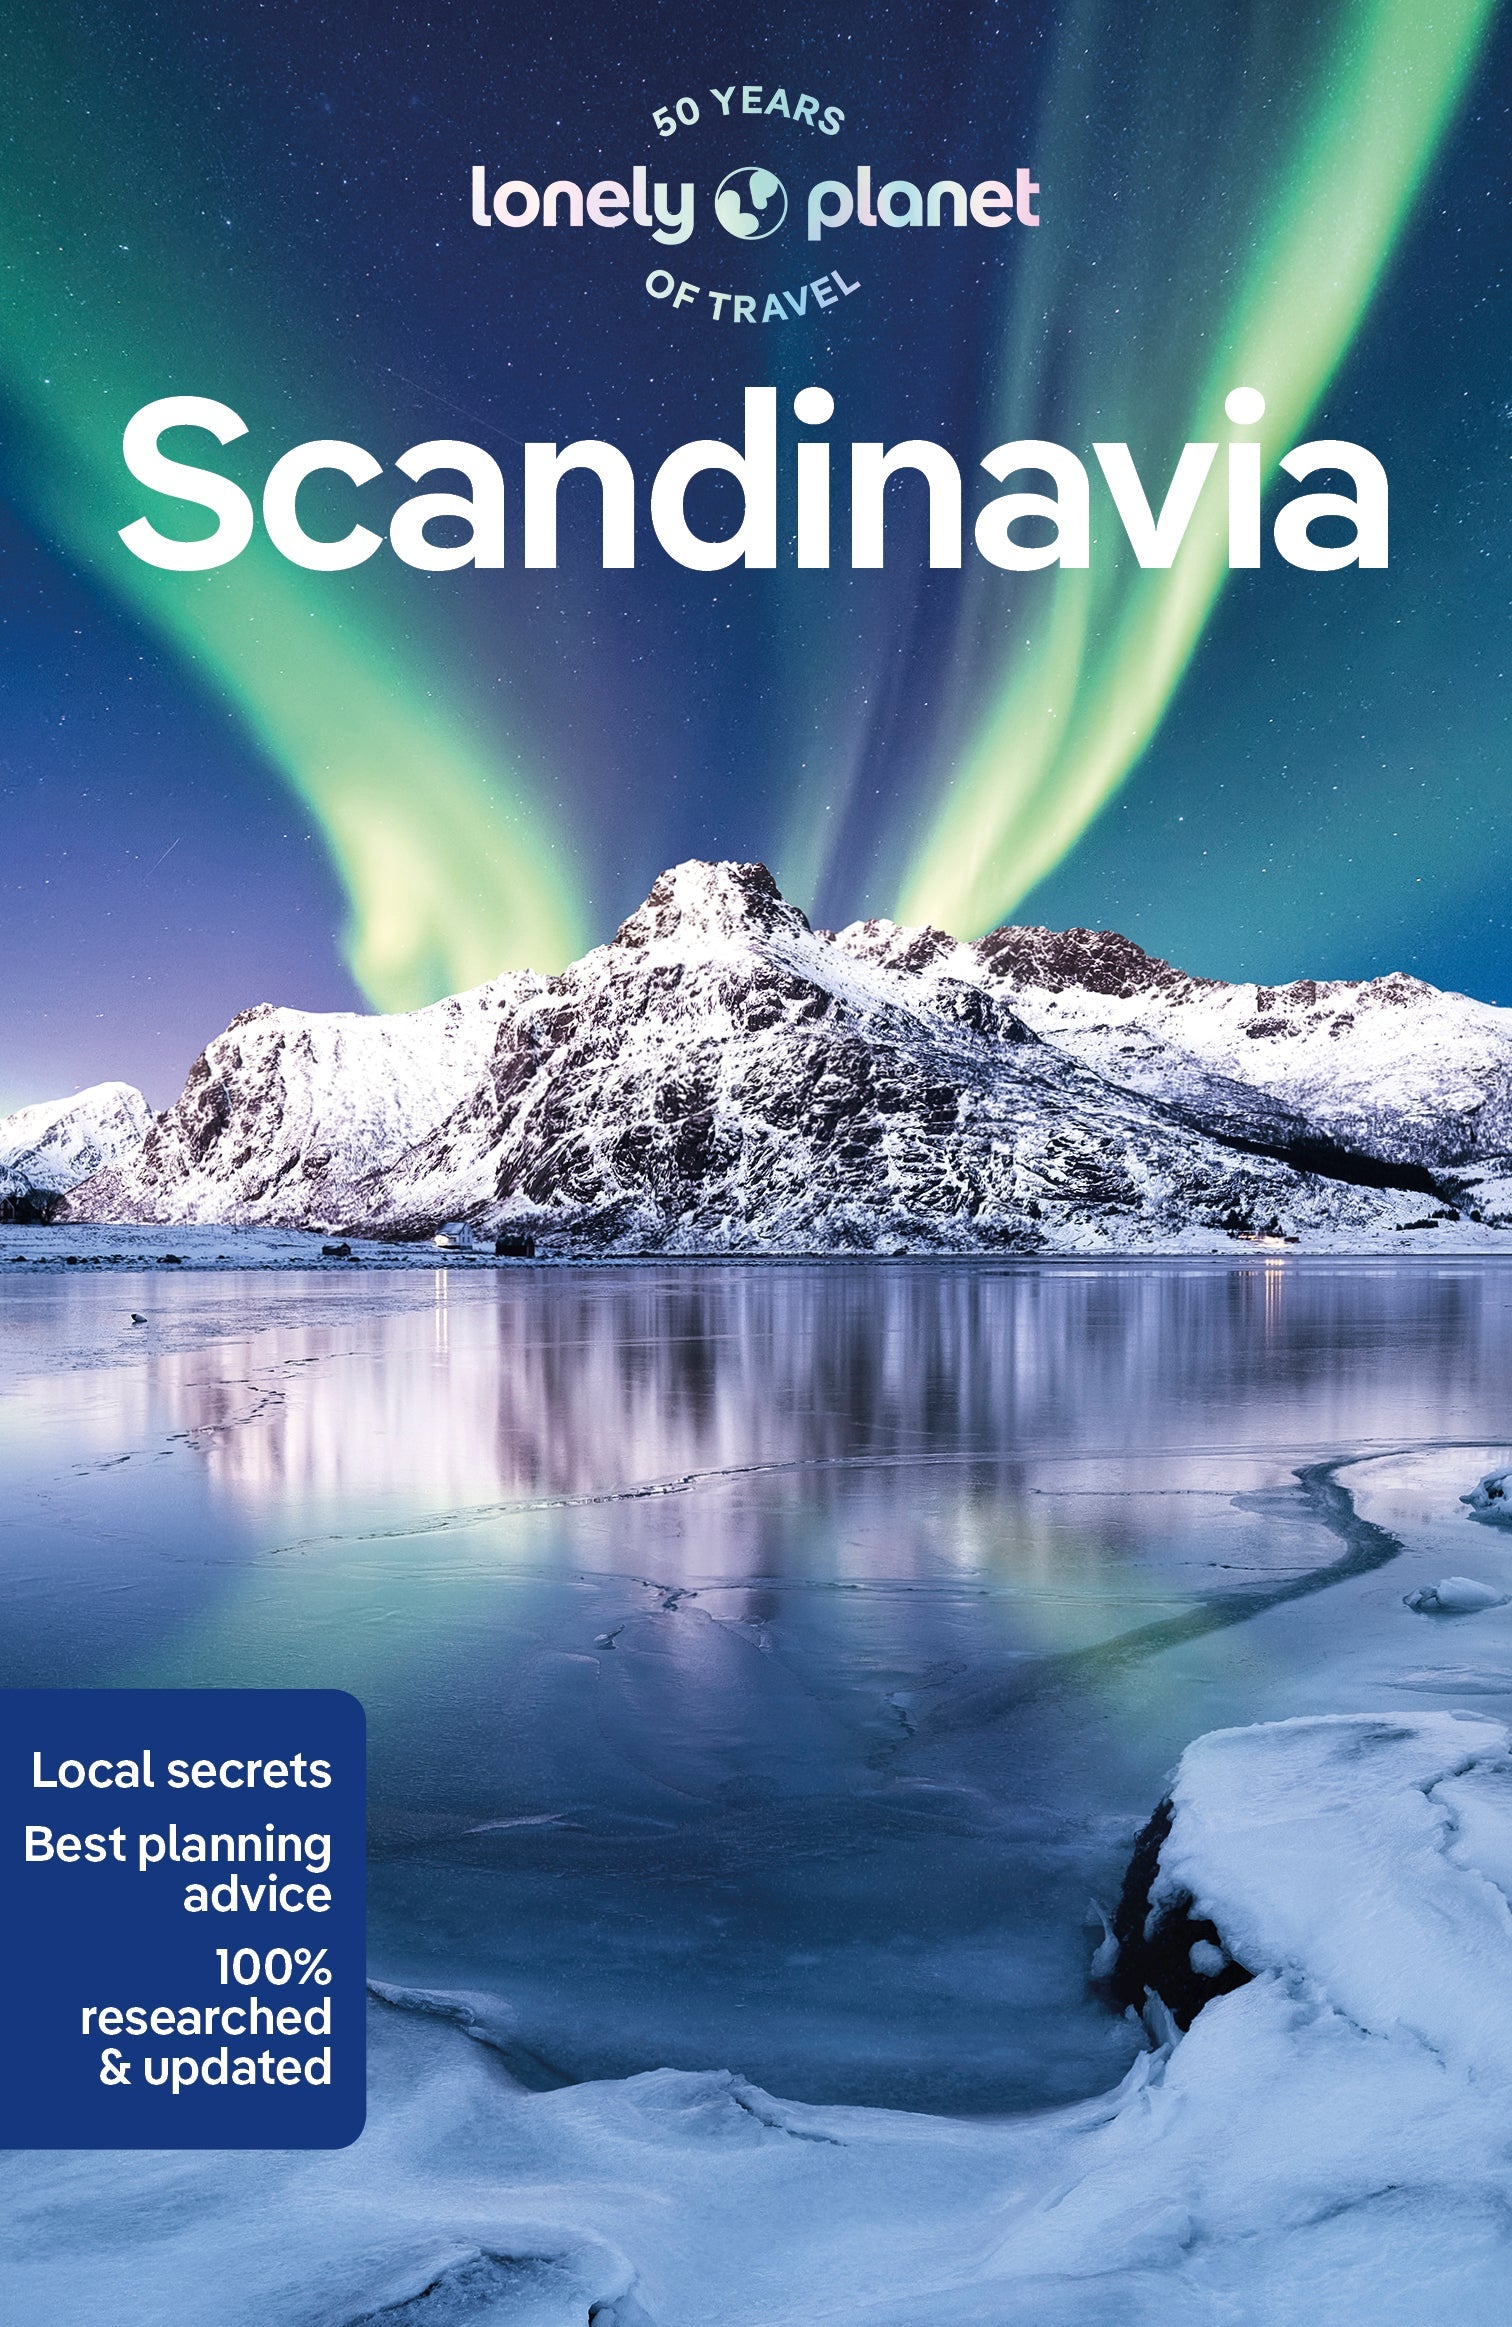 Ebook　Scandinavia　Book　Travel　and